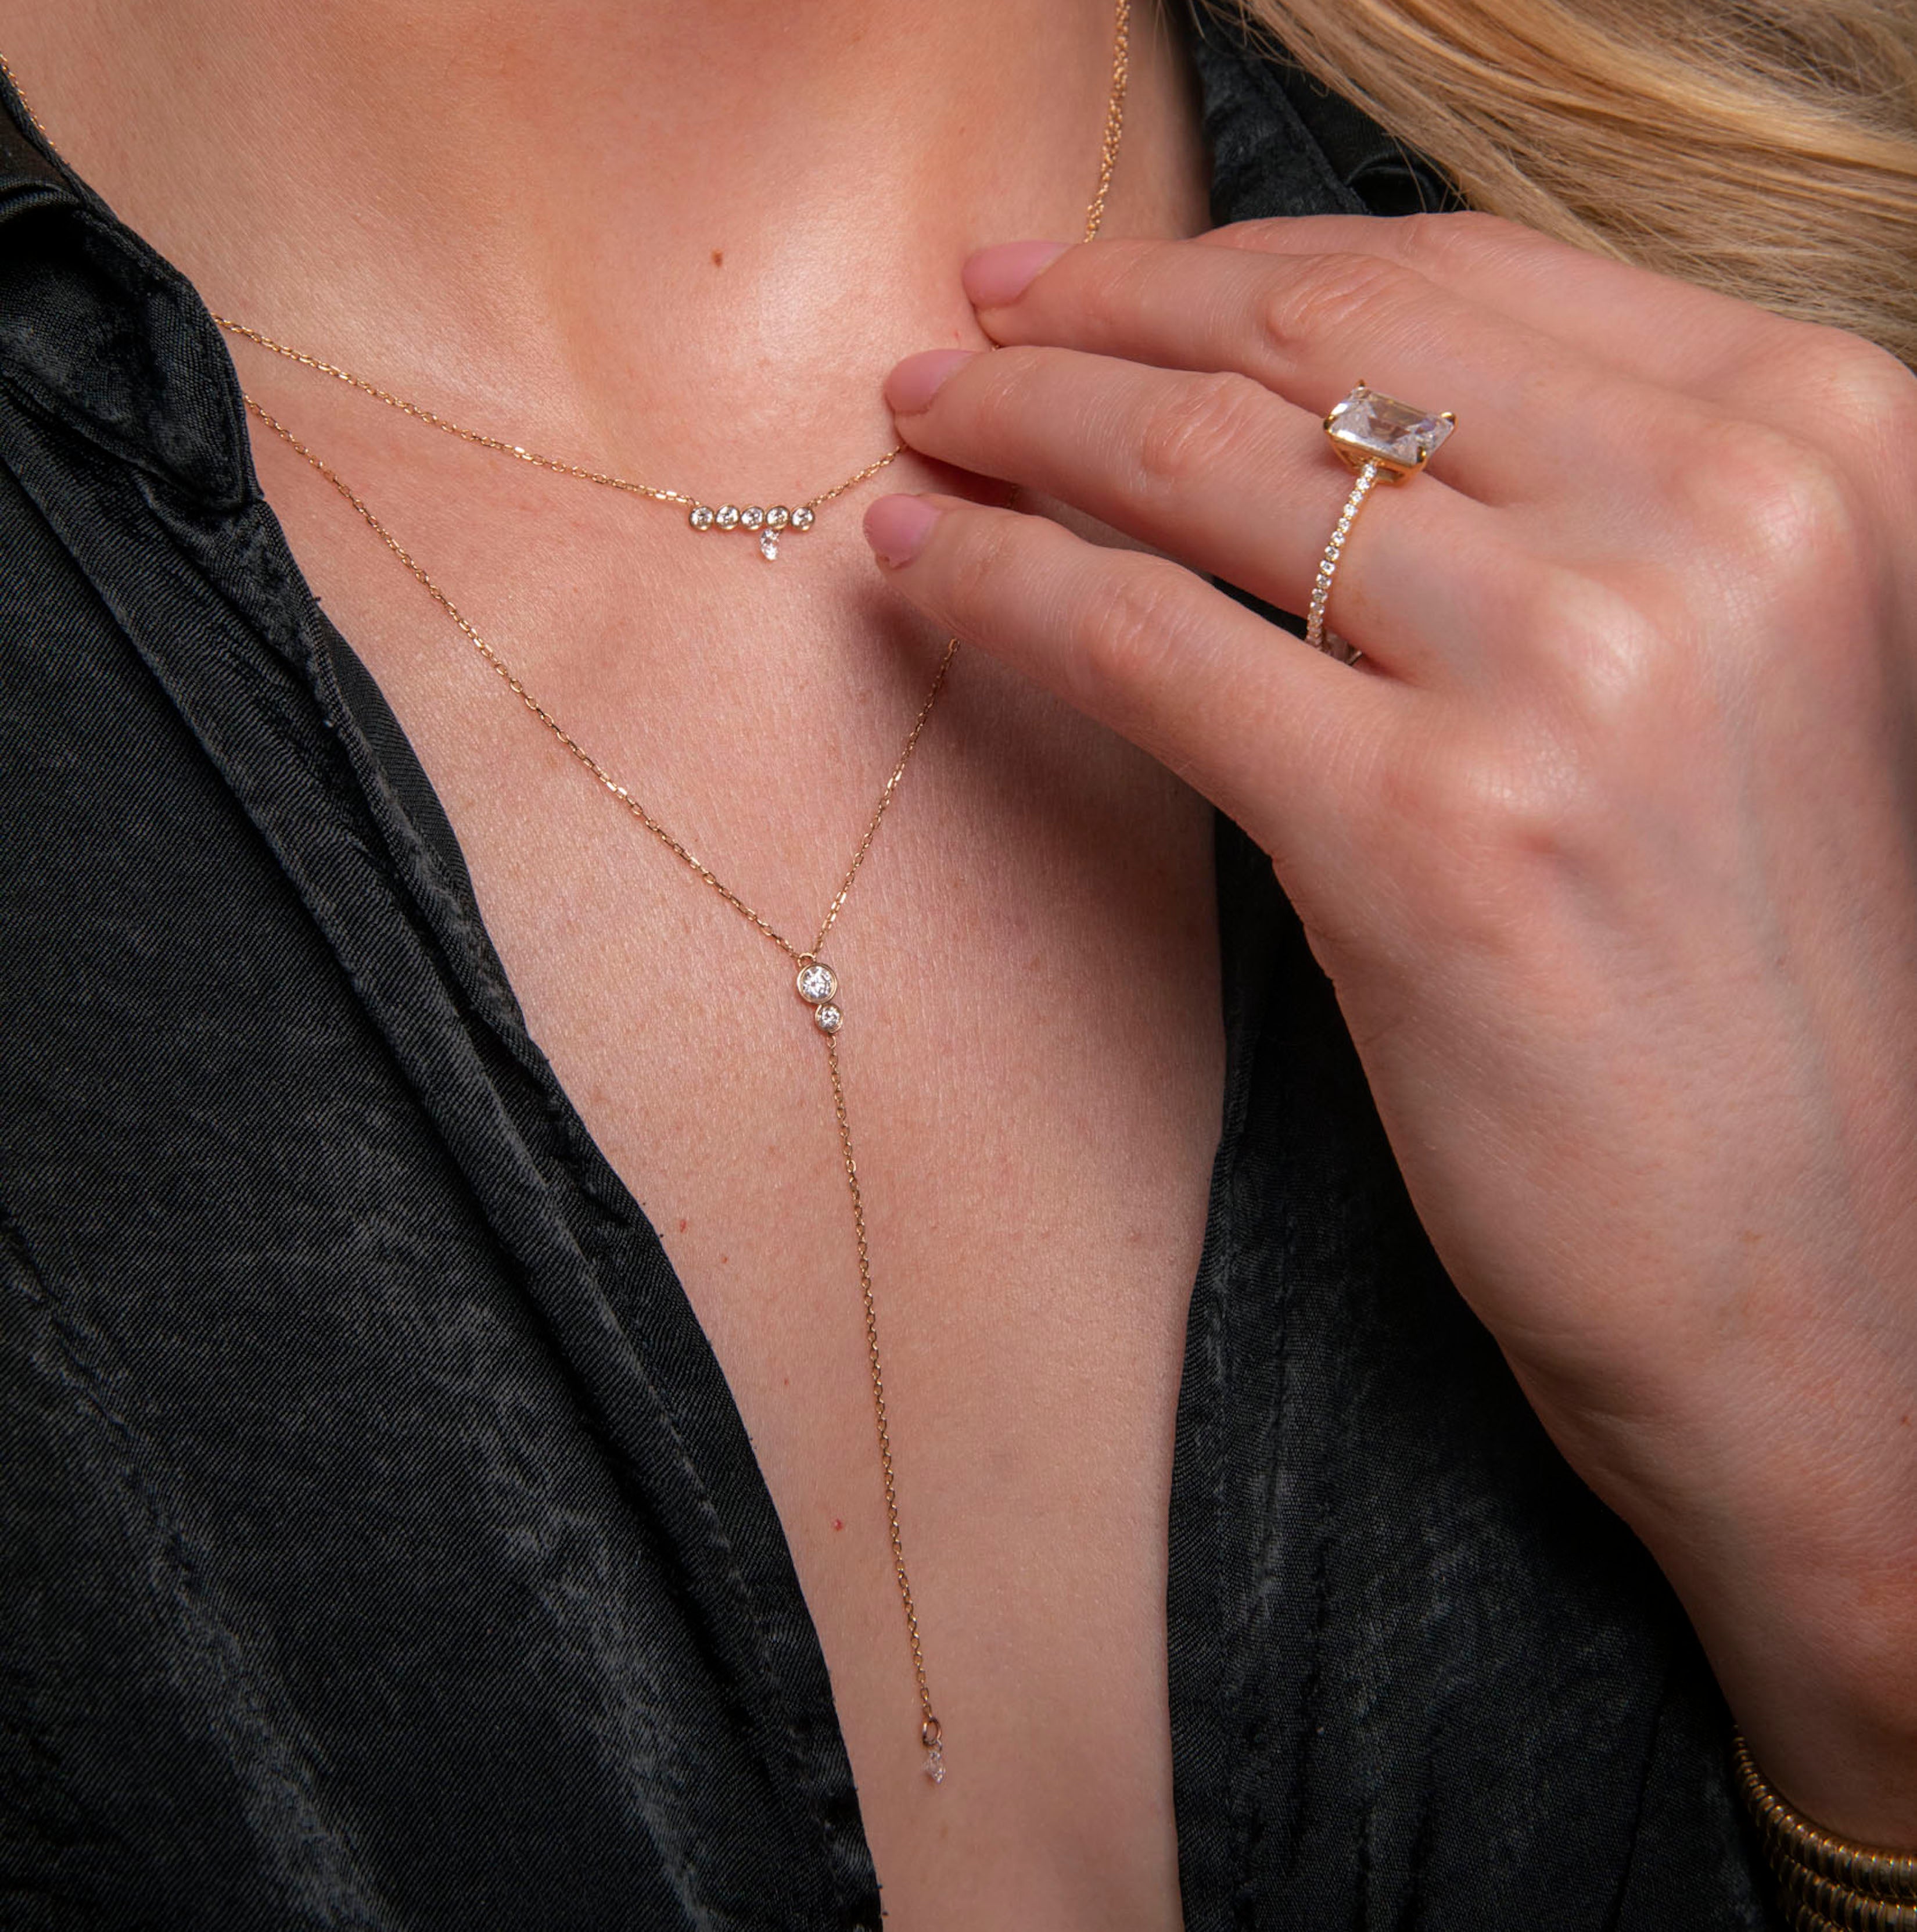 Five Diamond Line with Pierced Diamond Necklace